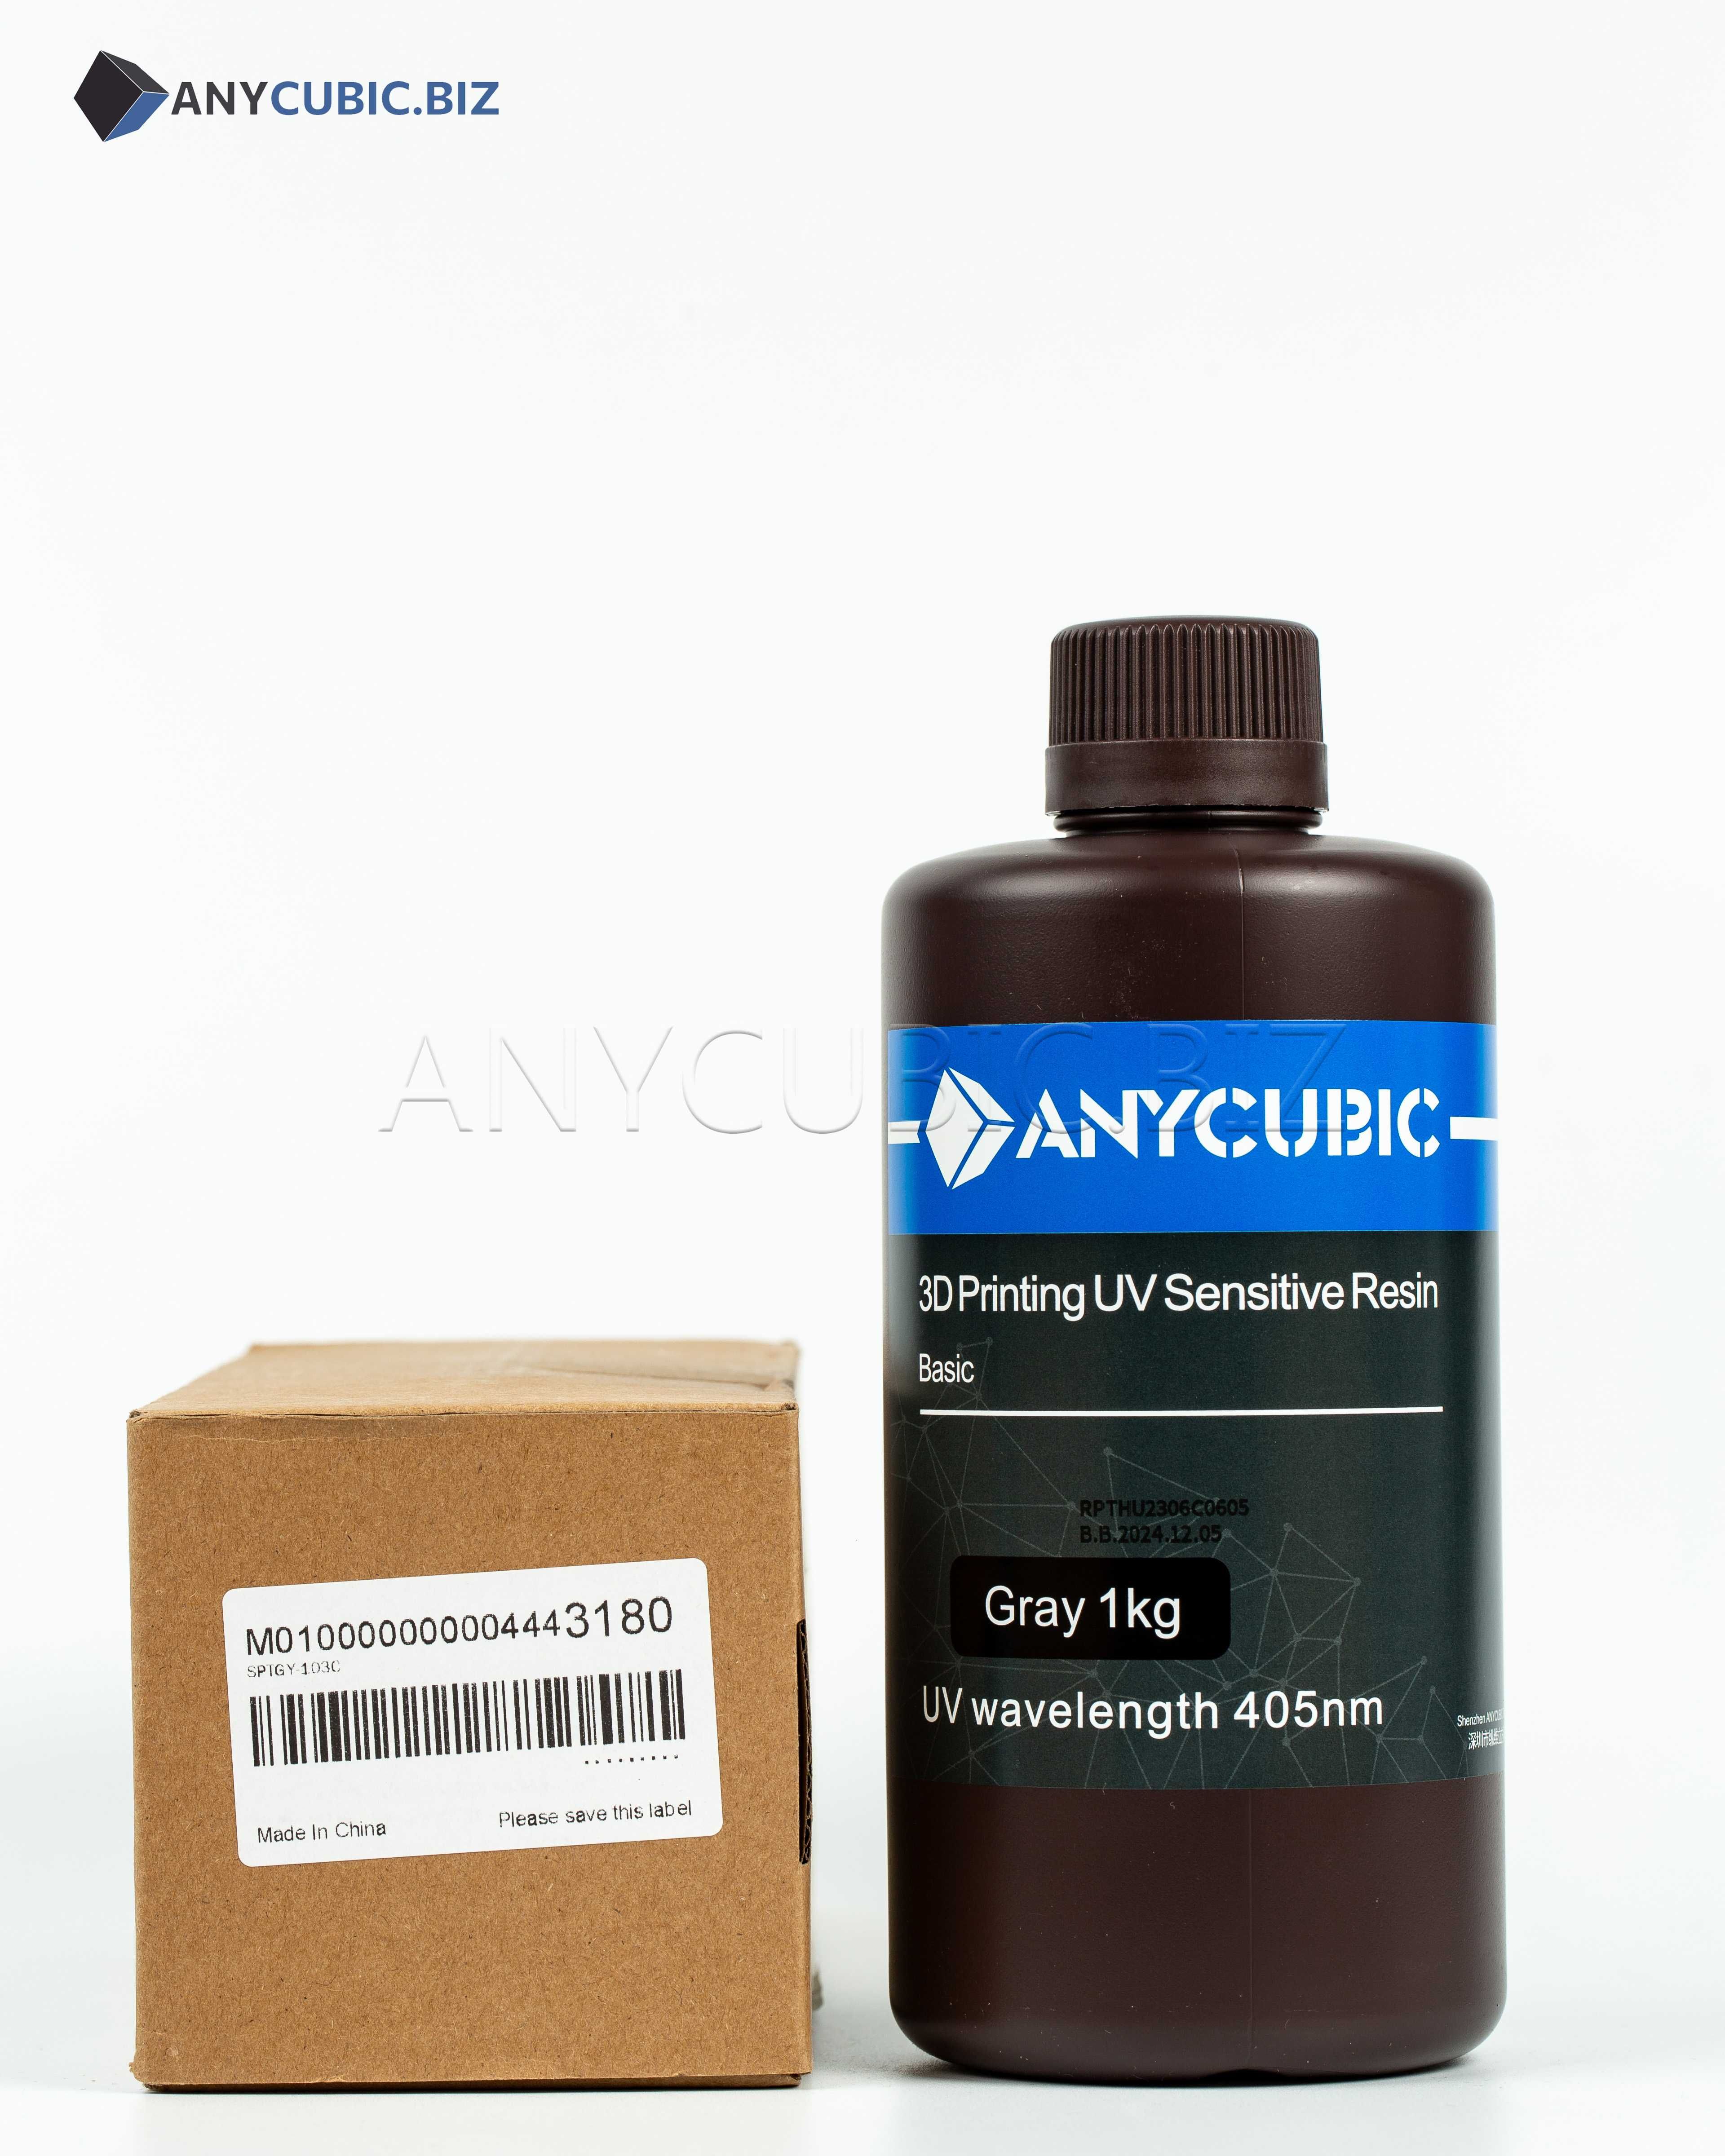 Фотополимерная смола Anycubic 405nm UV resin 1кг GREY СЕРАЯ